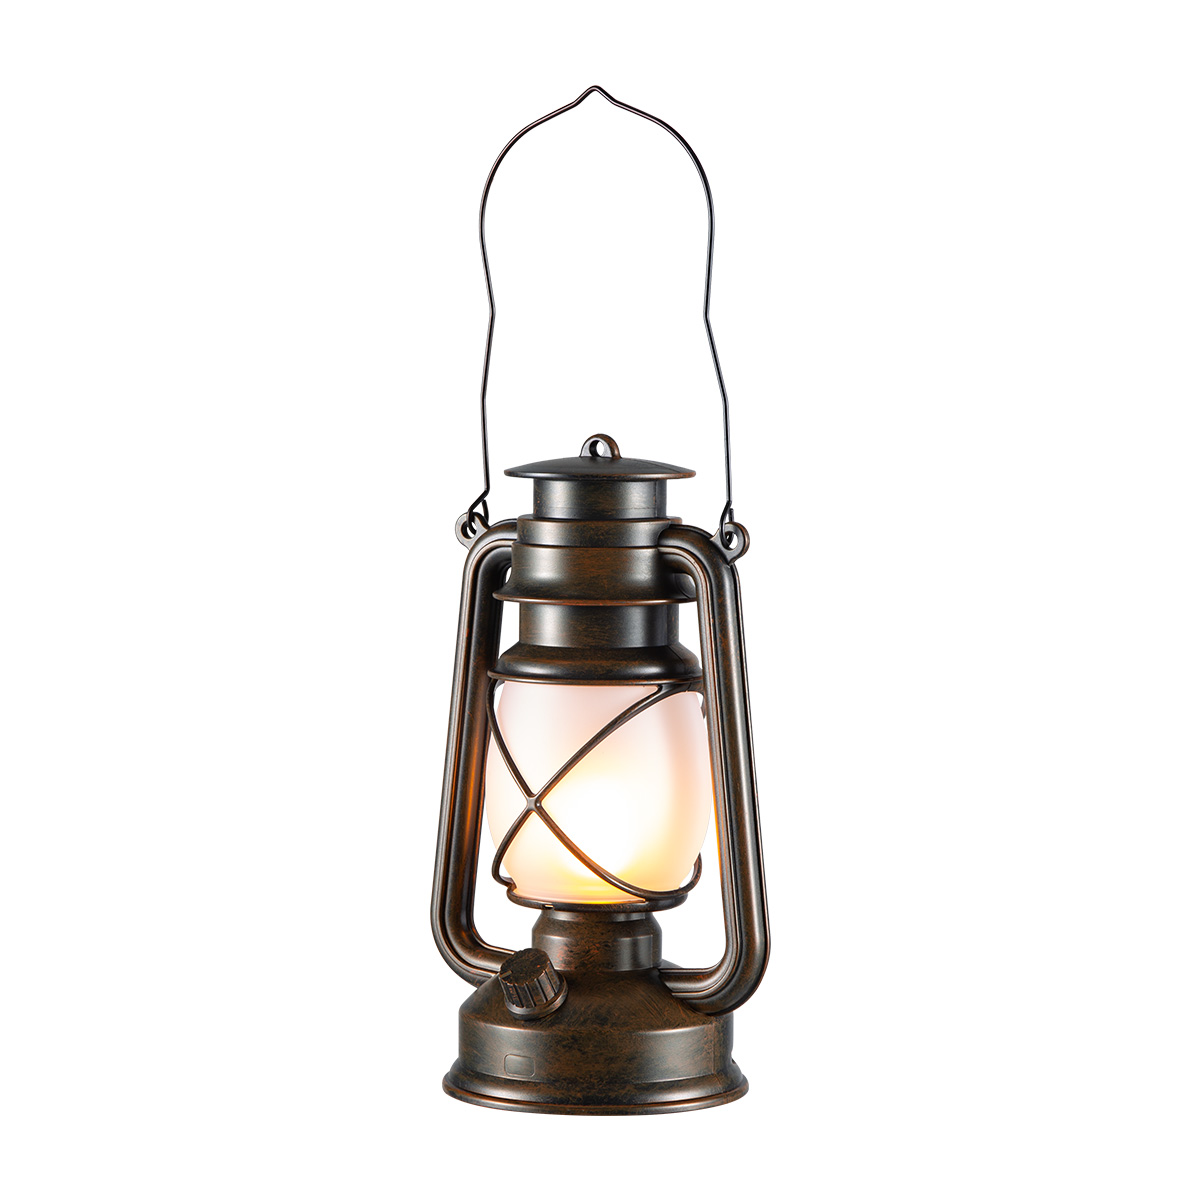 Tangla lighting - TLT7628-01VB - LED table lamp - rechargeable plastic - vintage brown - hook